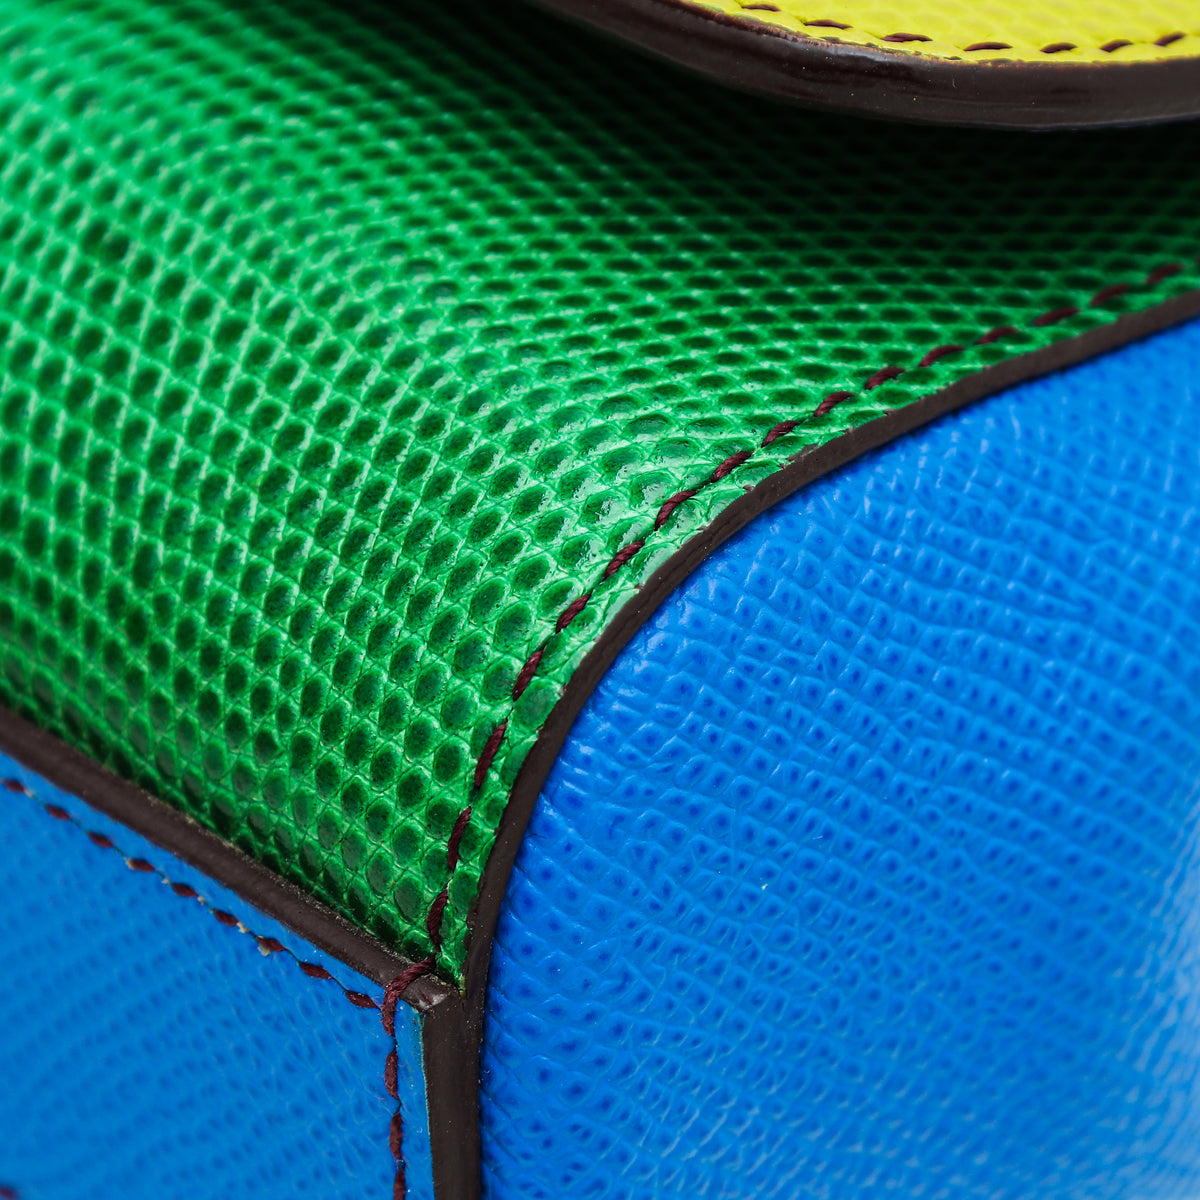 Dolce & Gabbana Multicolor Lizard Embossed Sicily Bag